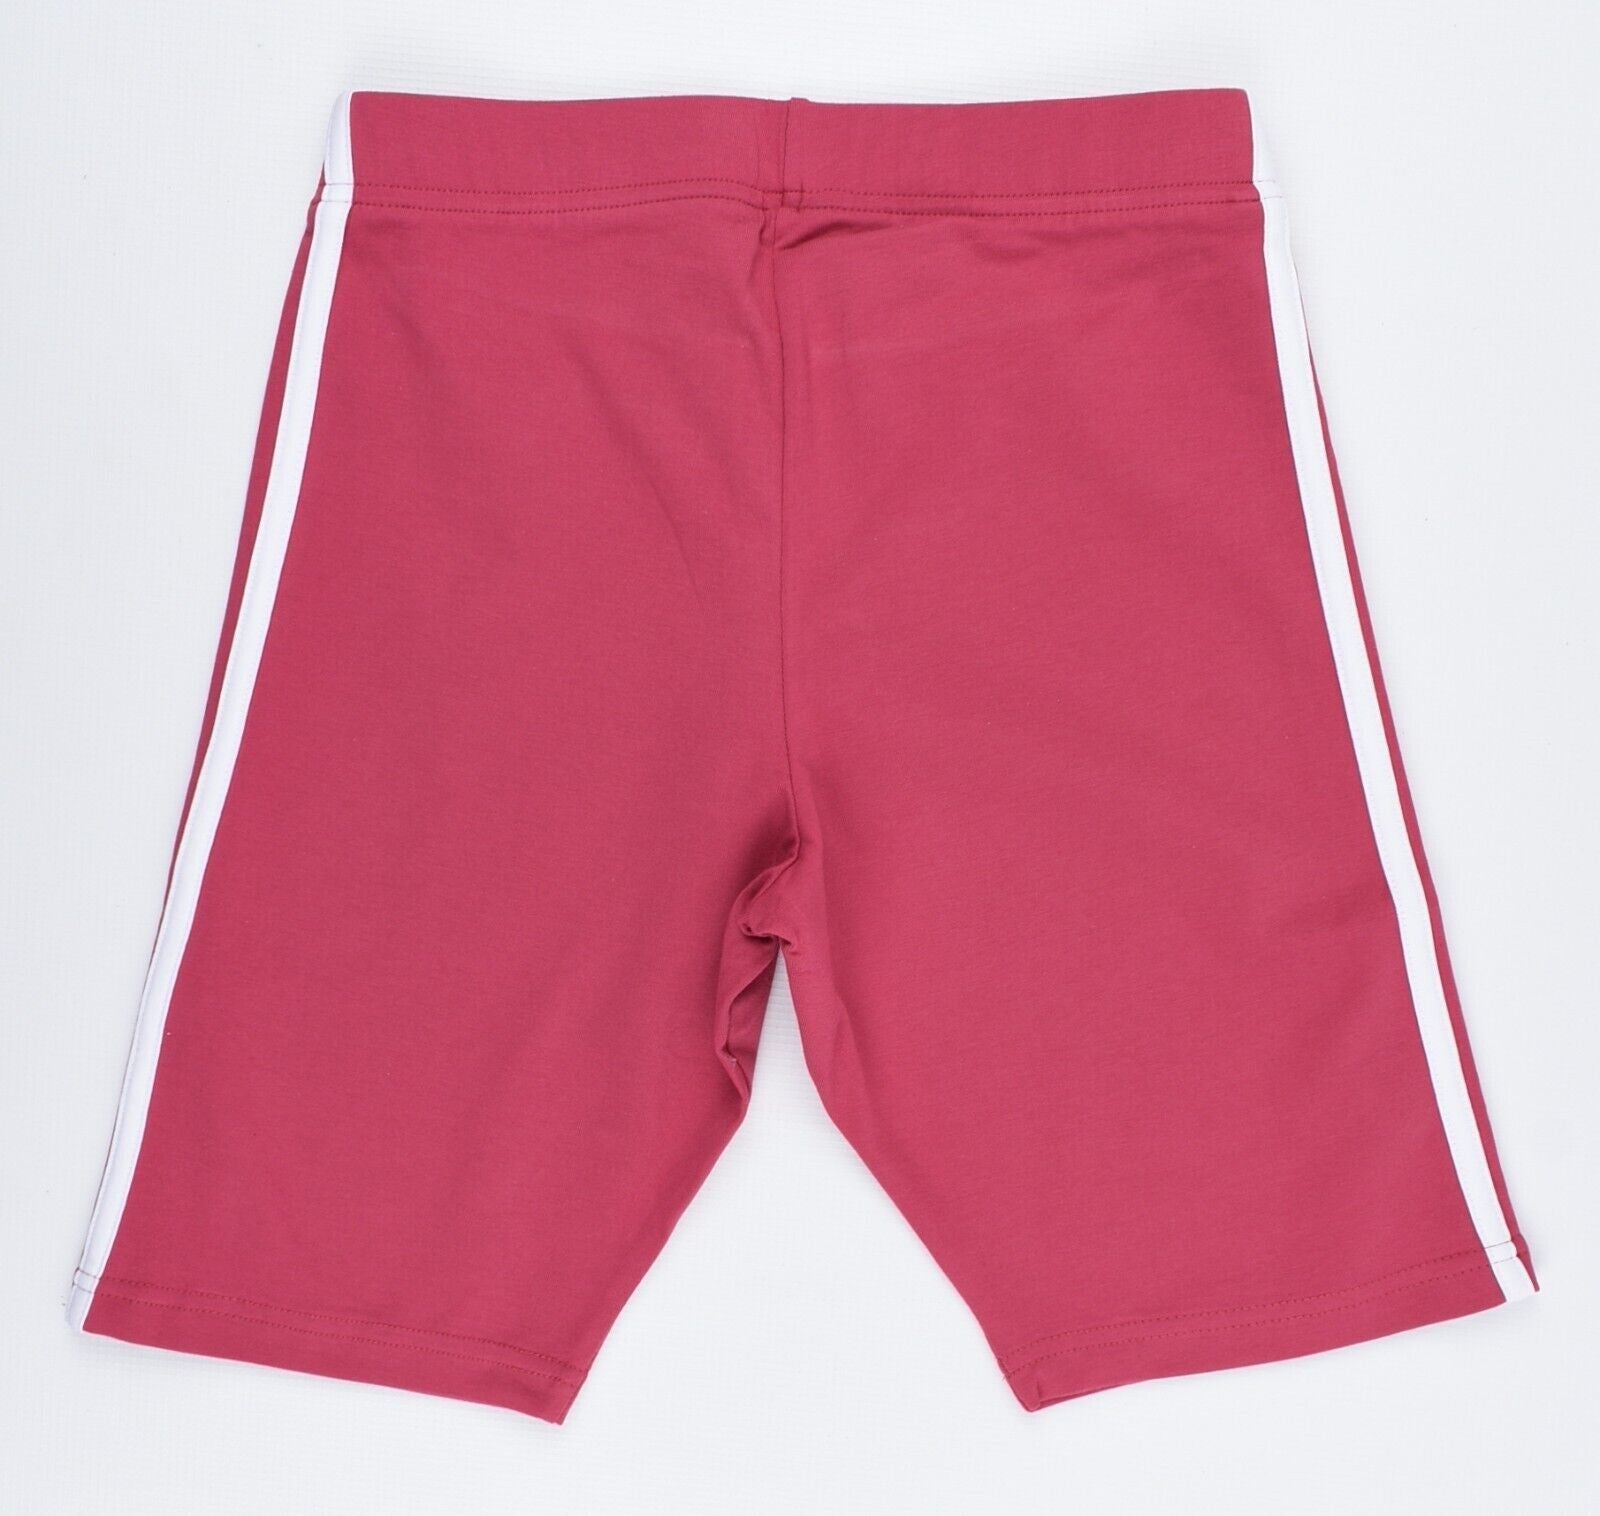 ADIDAS Women's 3 Stripes Short Leggings Shorts, Pink, size M (UK 12-14)